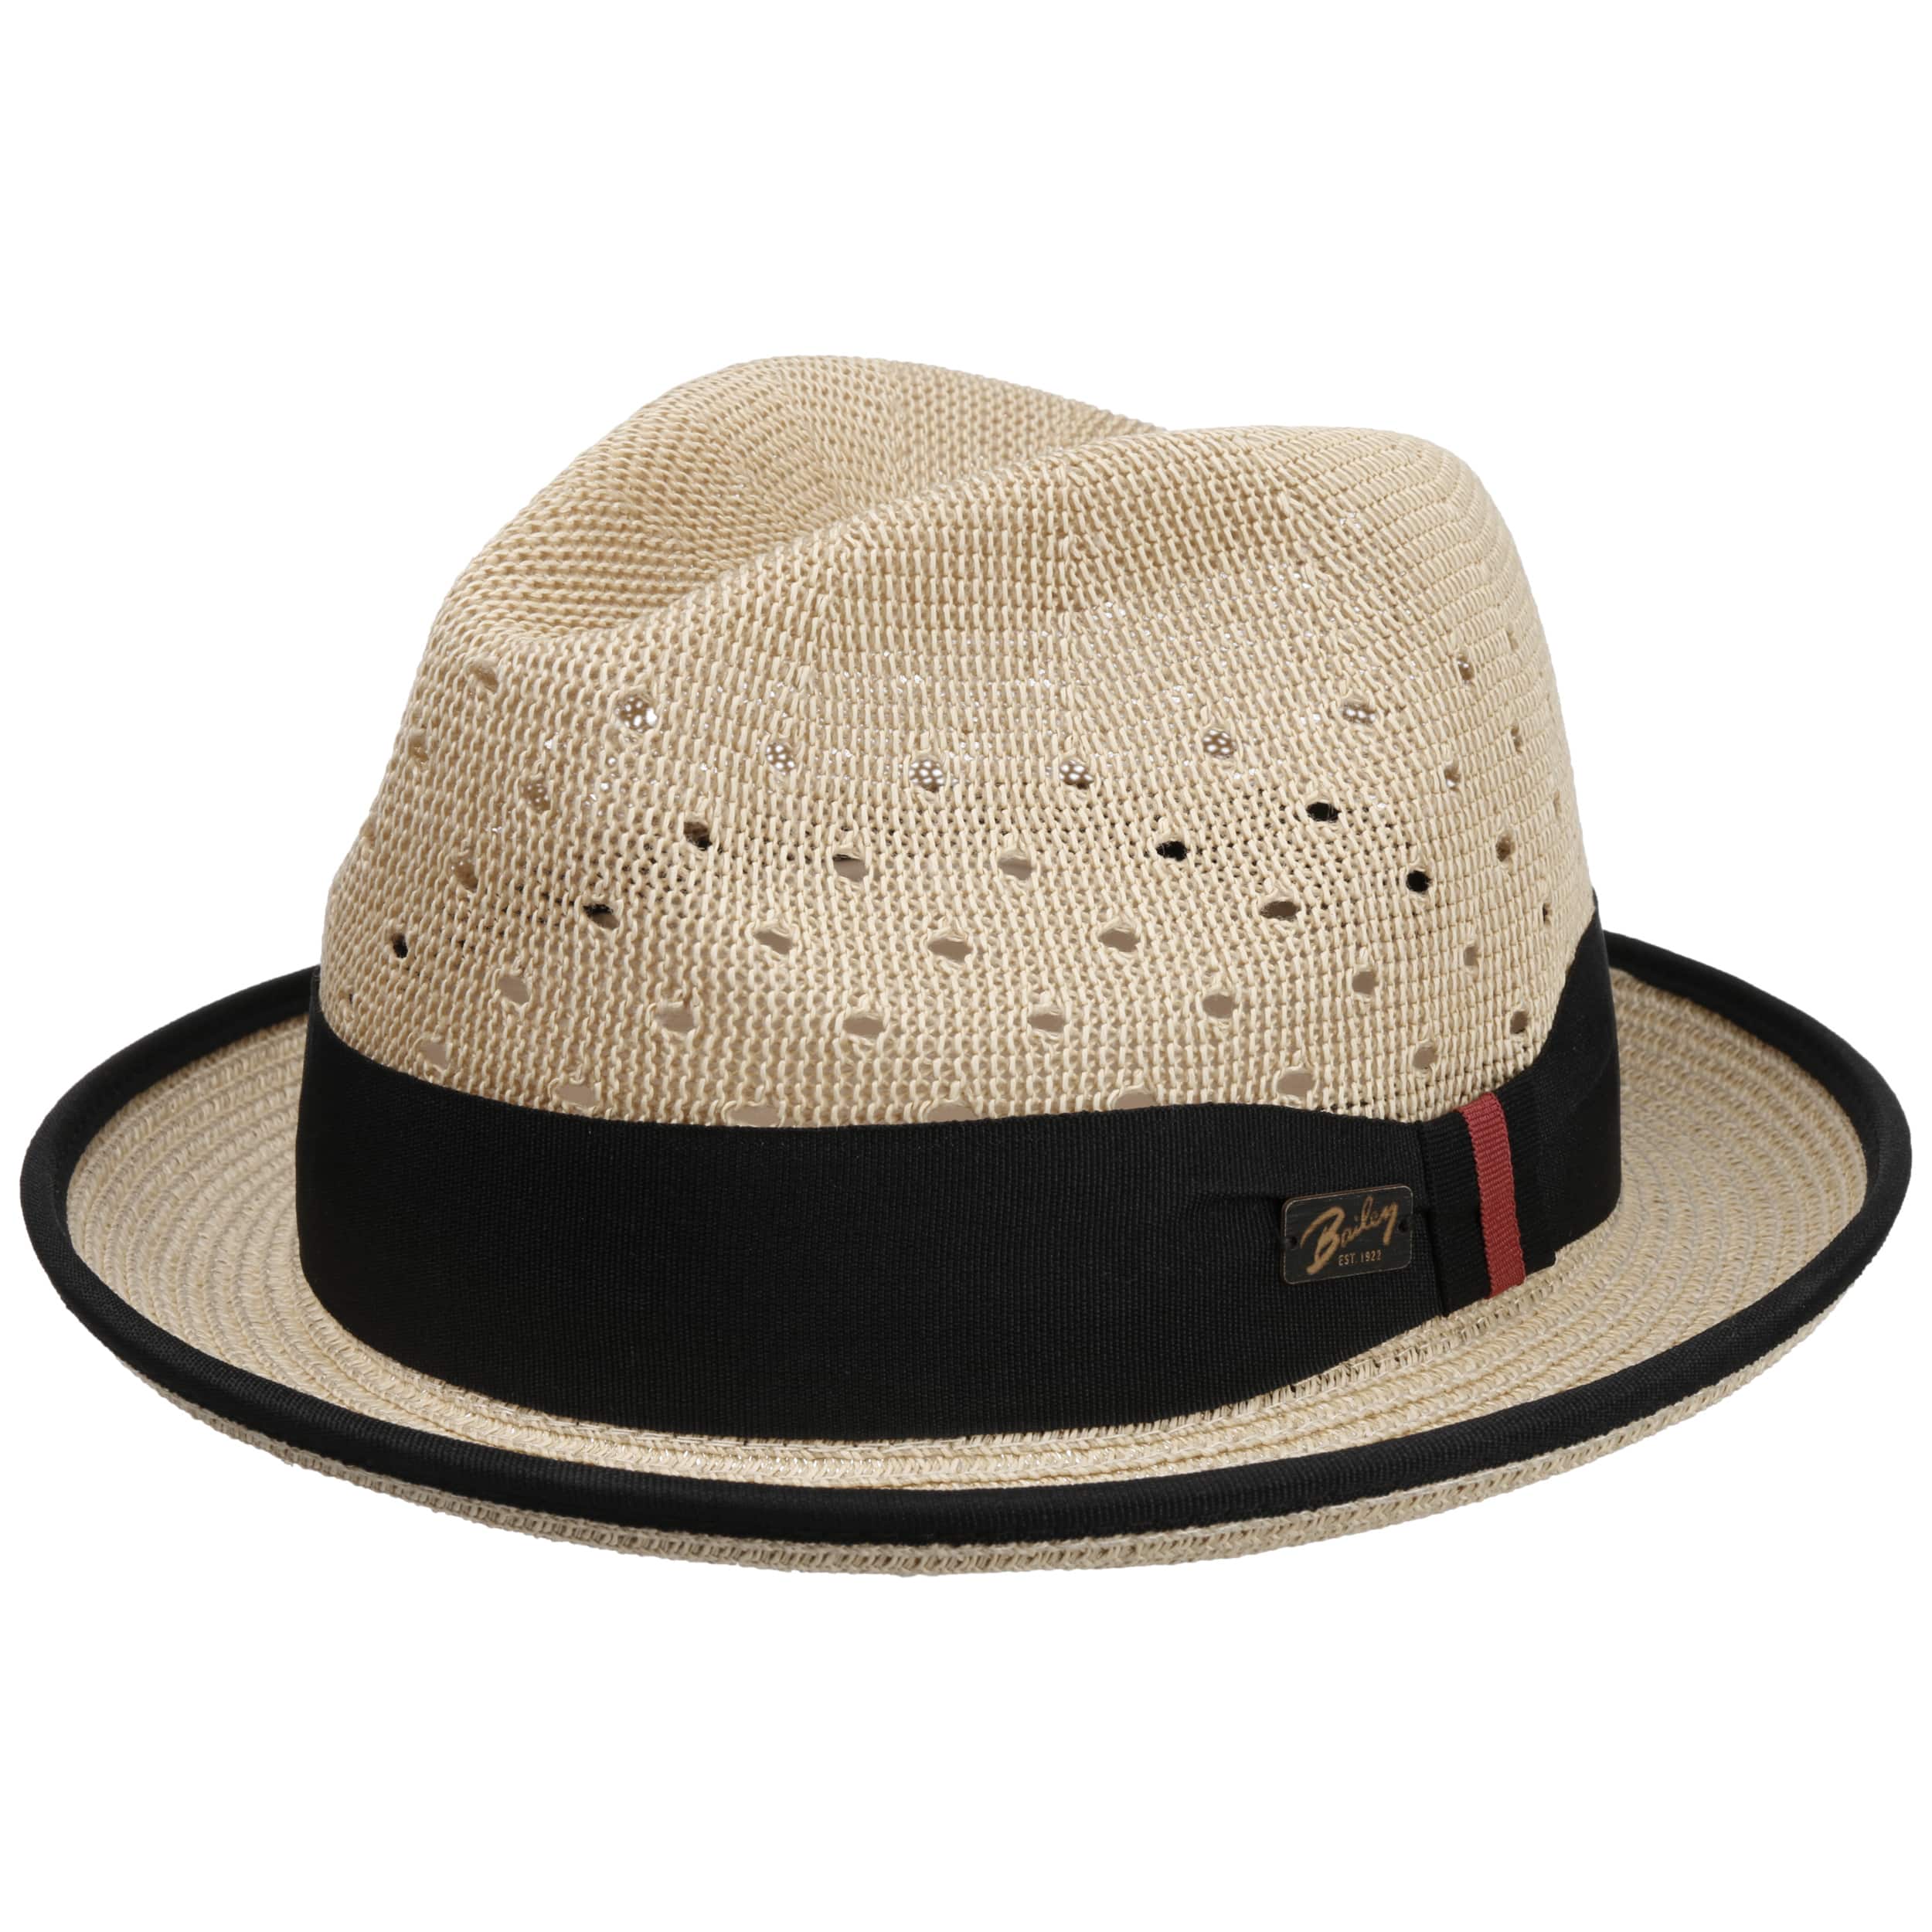 Bascom Player Straw Hat by Bailey 1922 - 55,95 €